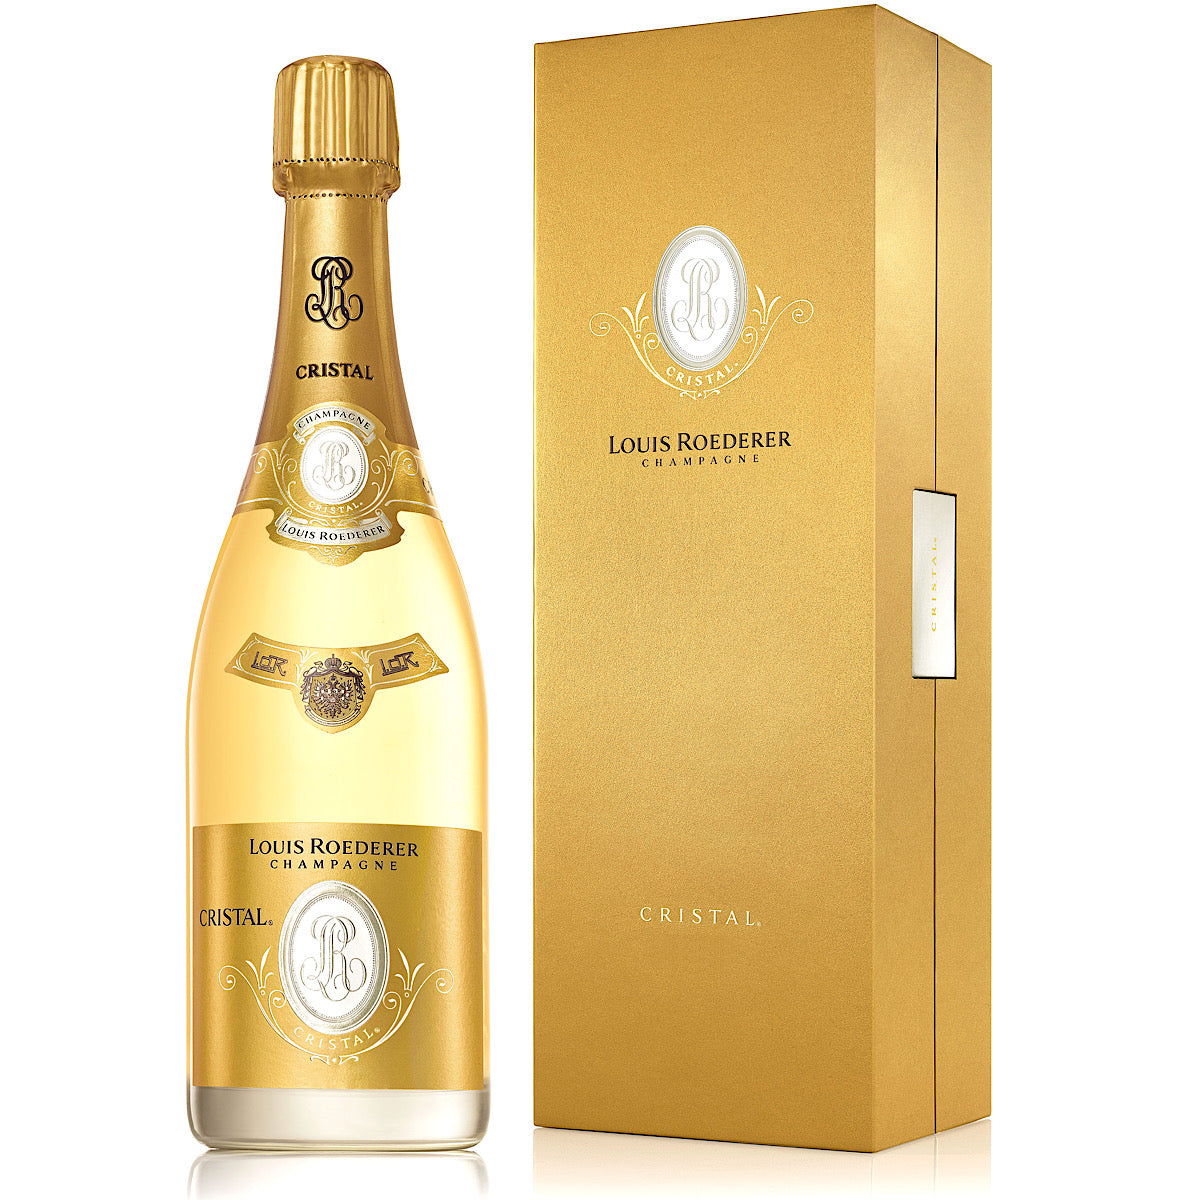 Cristal Champagne GIft Box 2015 Vintage 75cl